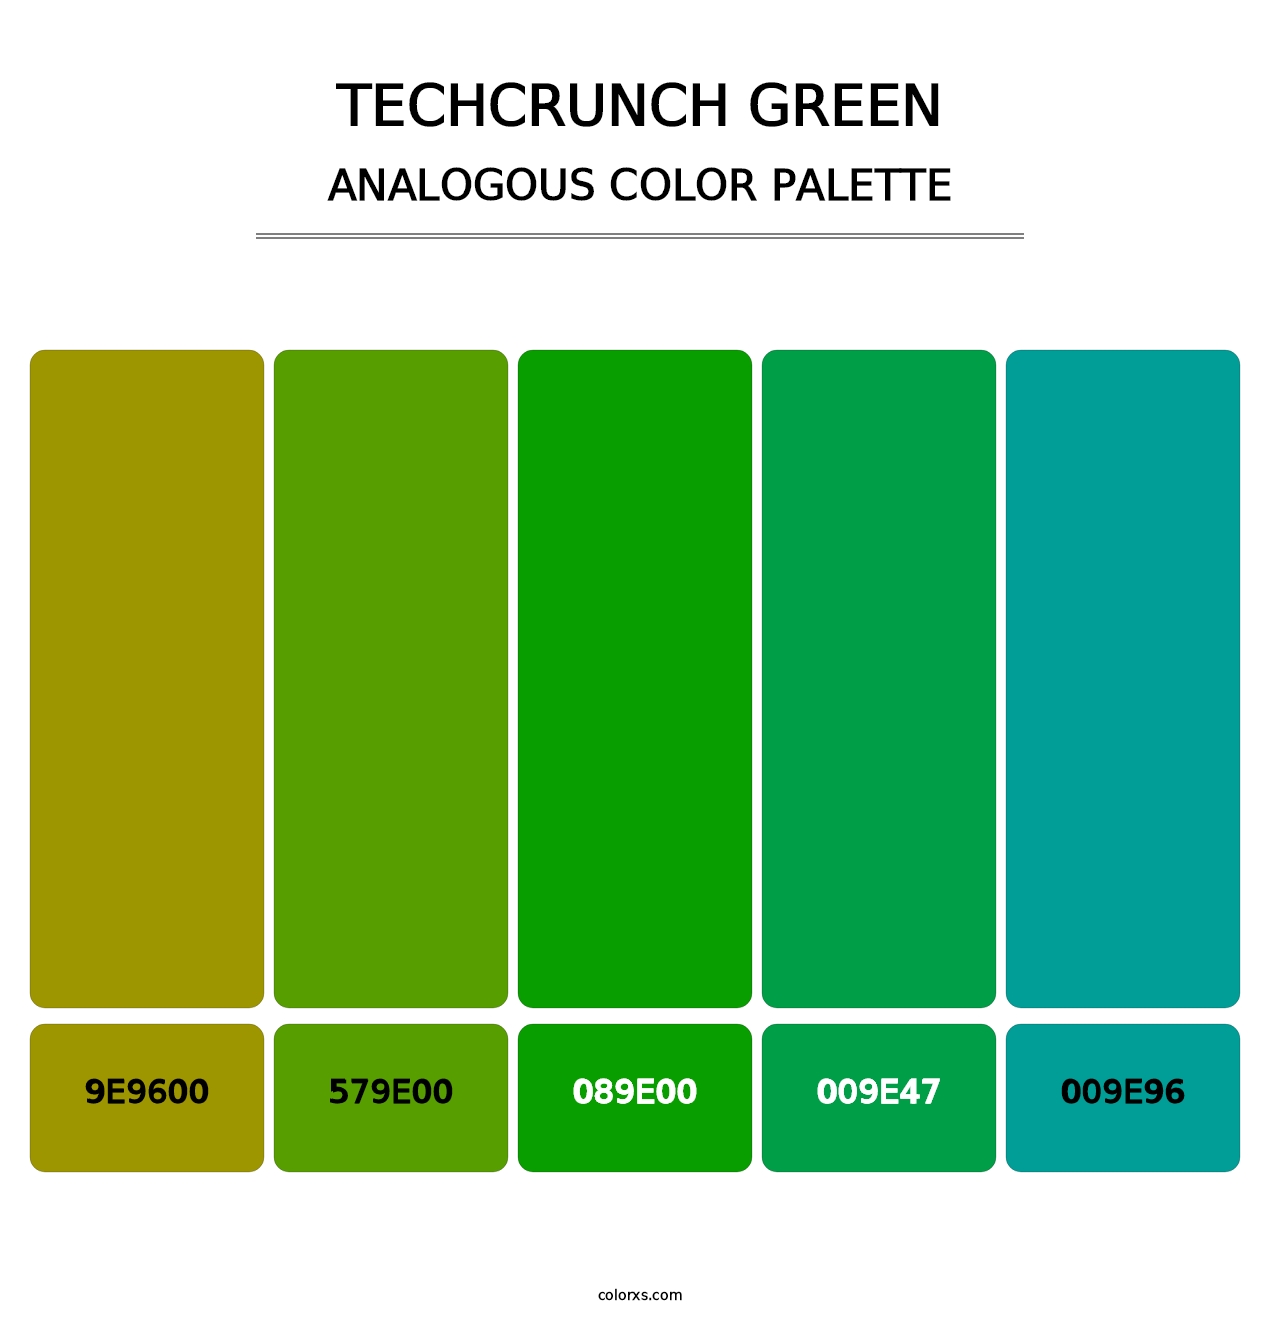 TechCrunch Green - Analogous Color Palette